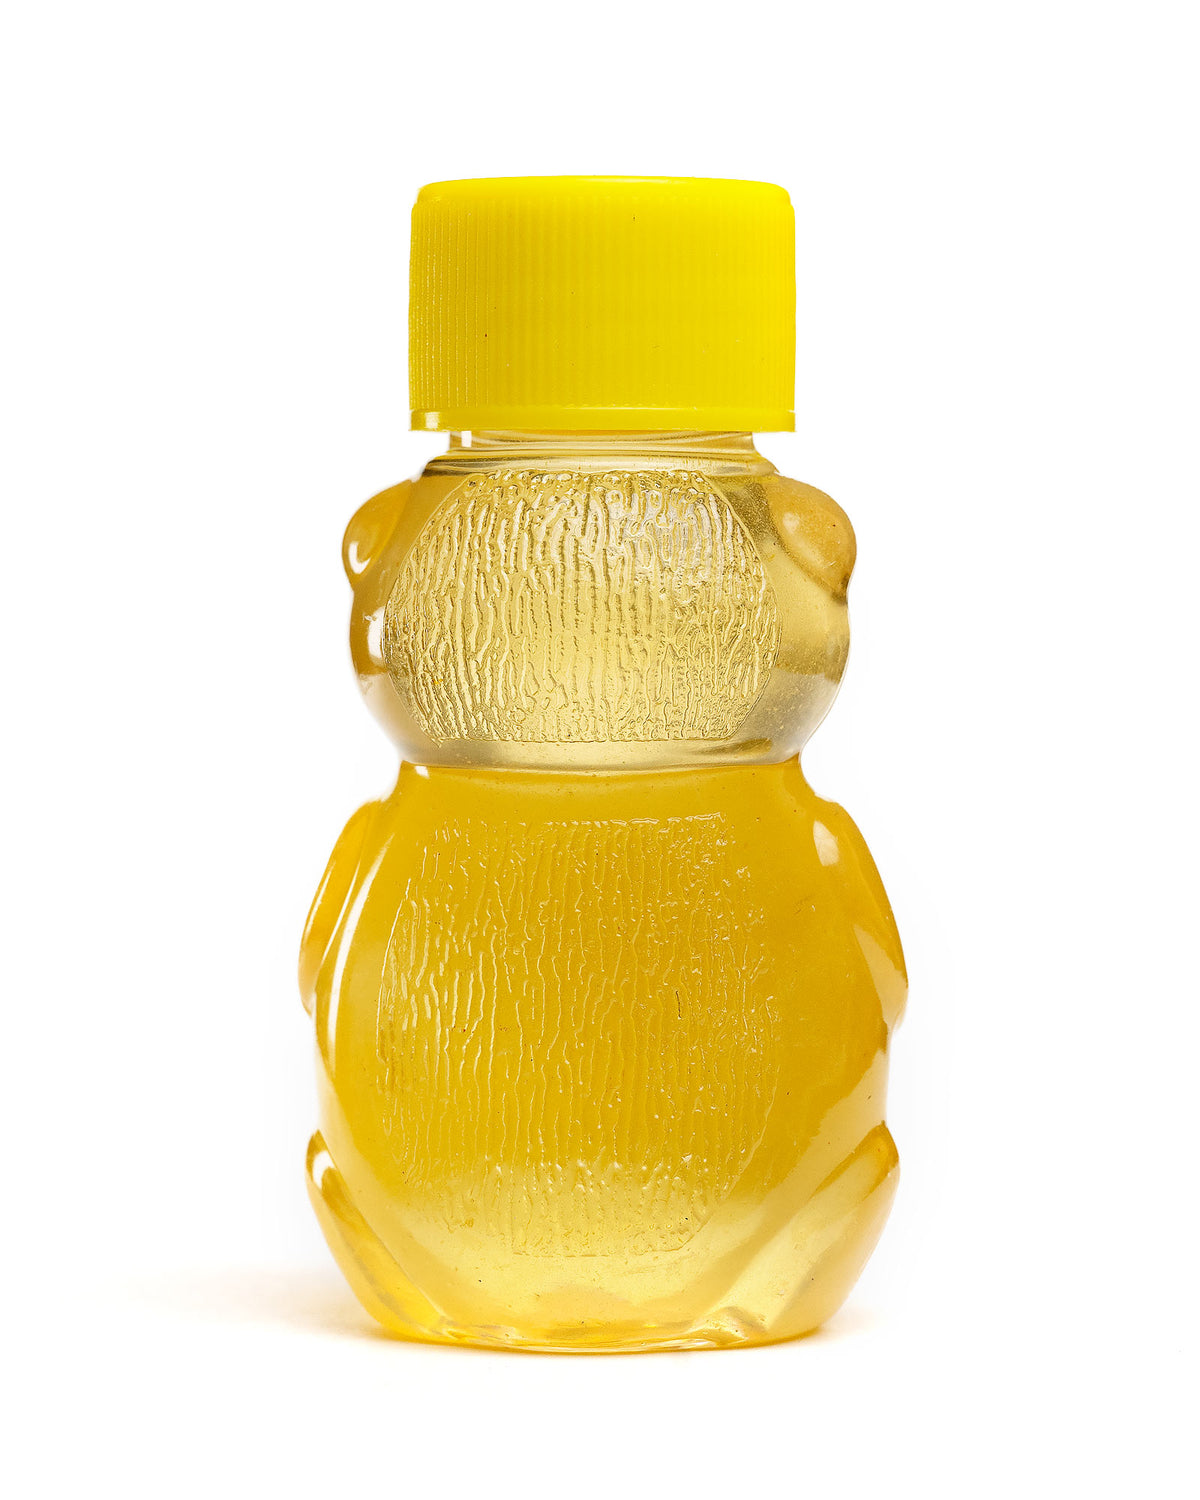 Local Wildflower Honey (2.2 oz.)